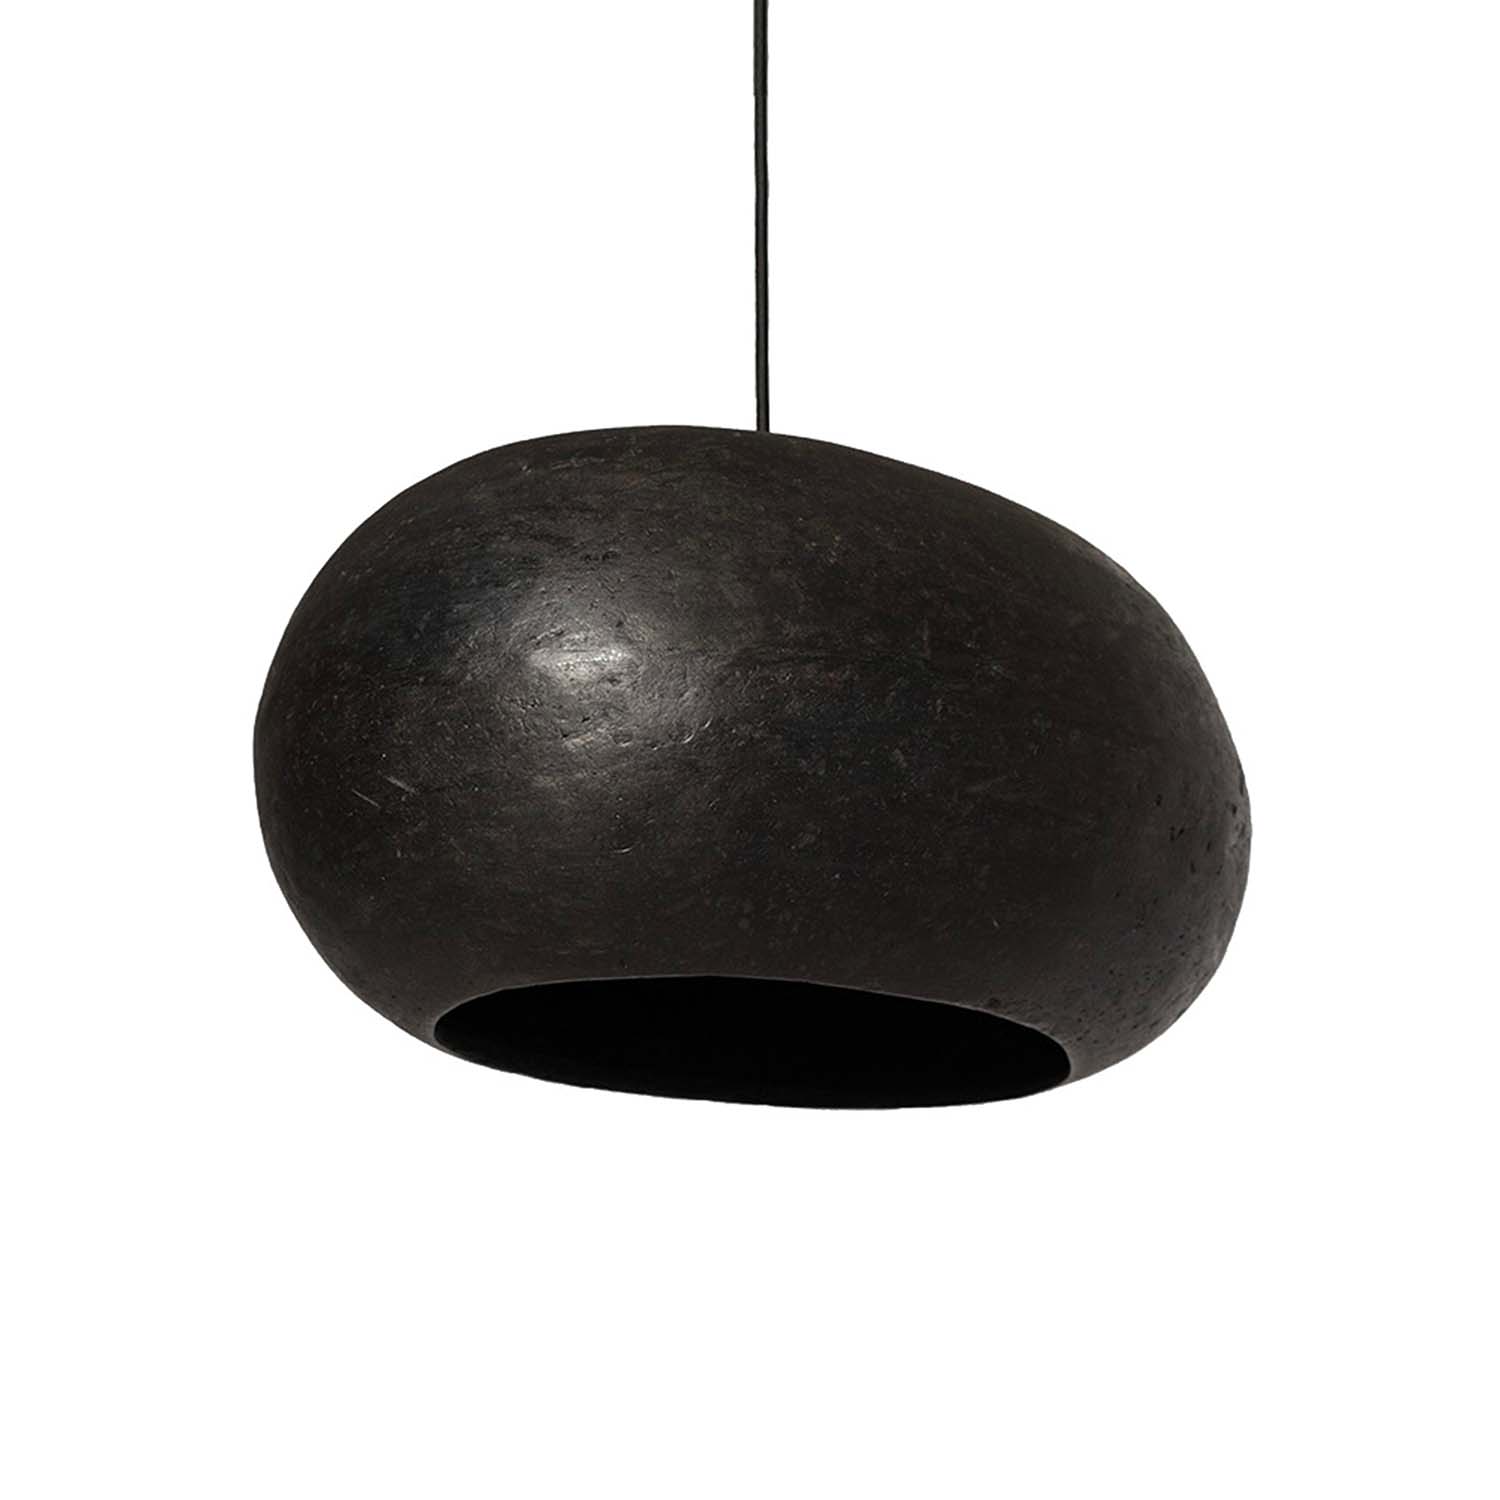 PEBBLE - Terracotta, gray or black recycled cardboard pendant light